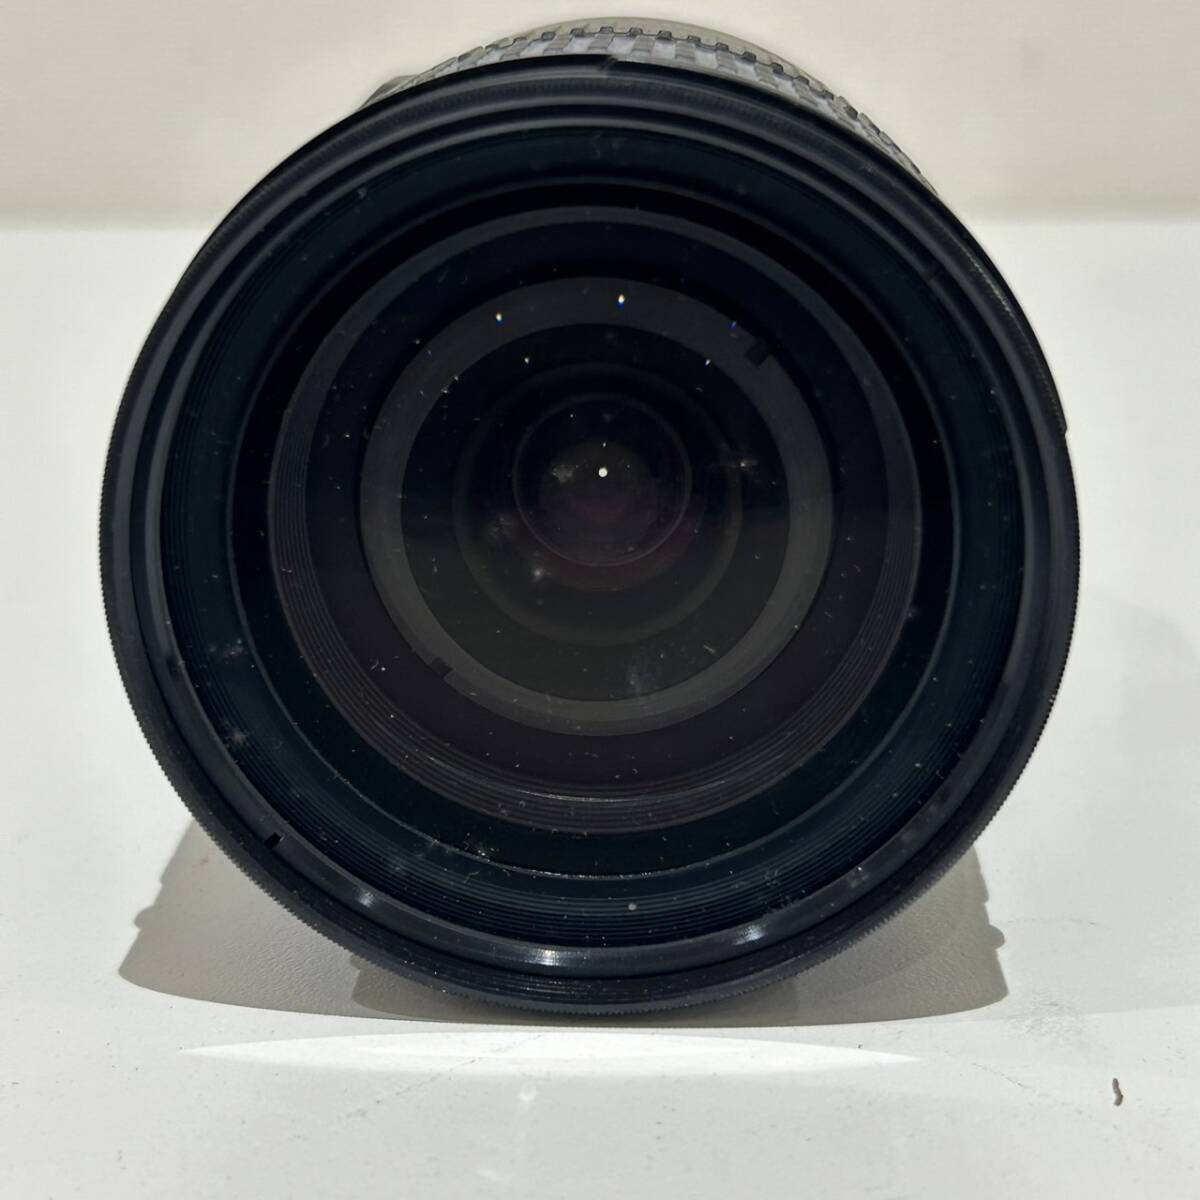 【AMT-10143】Nikon ニコン カメラレンズ SWM VR IF Aspherical AF-S NIKKOR 24-120mm 1:3:5.6 G 72mm MC-NORMAL MARUMI レンズ交換_画像2